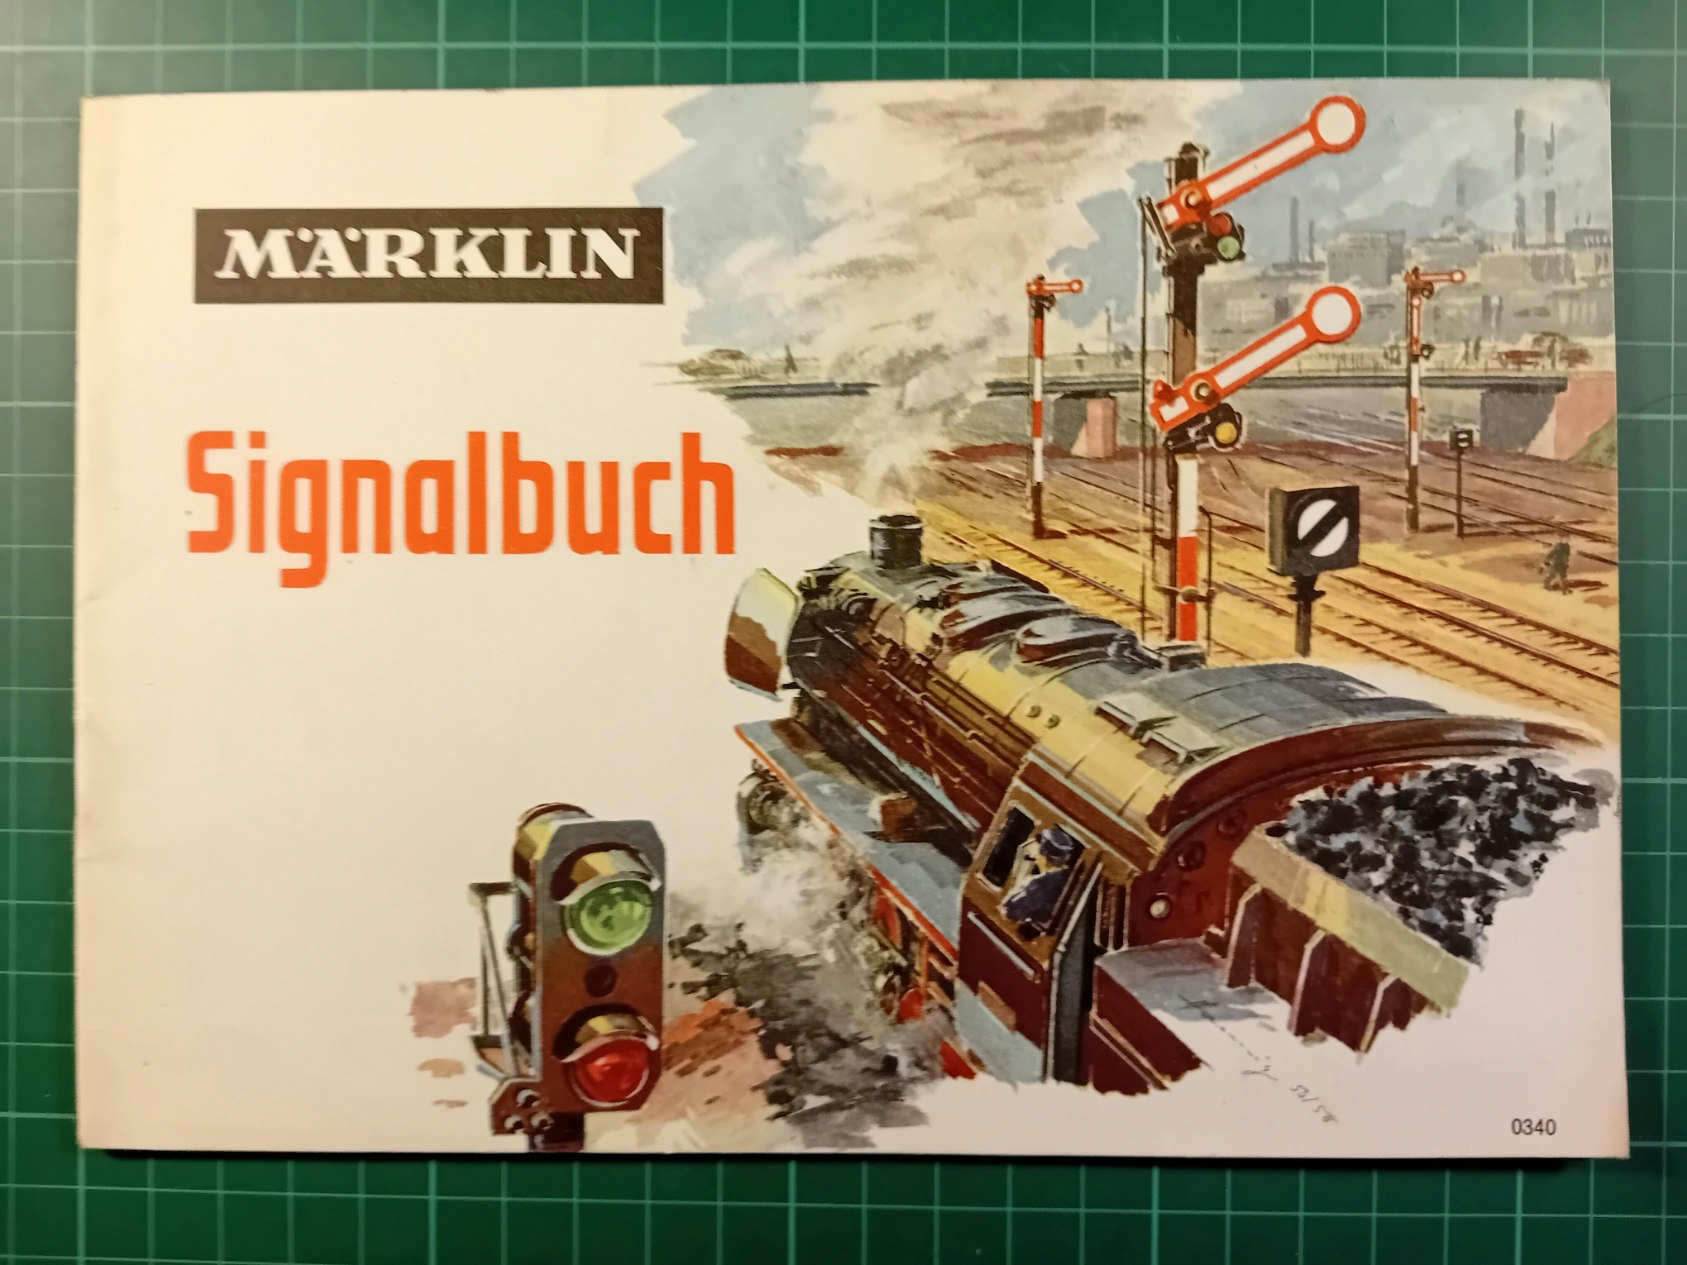 Marklin signalbuch 1955